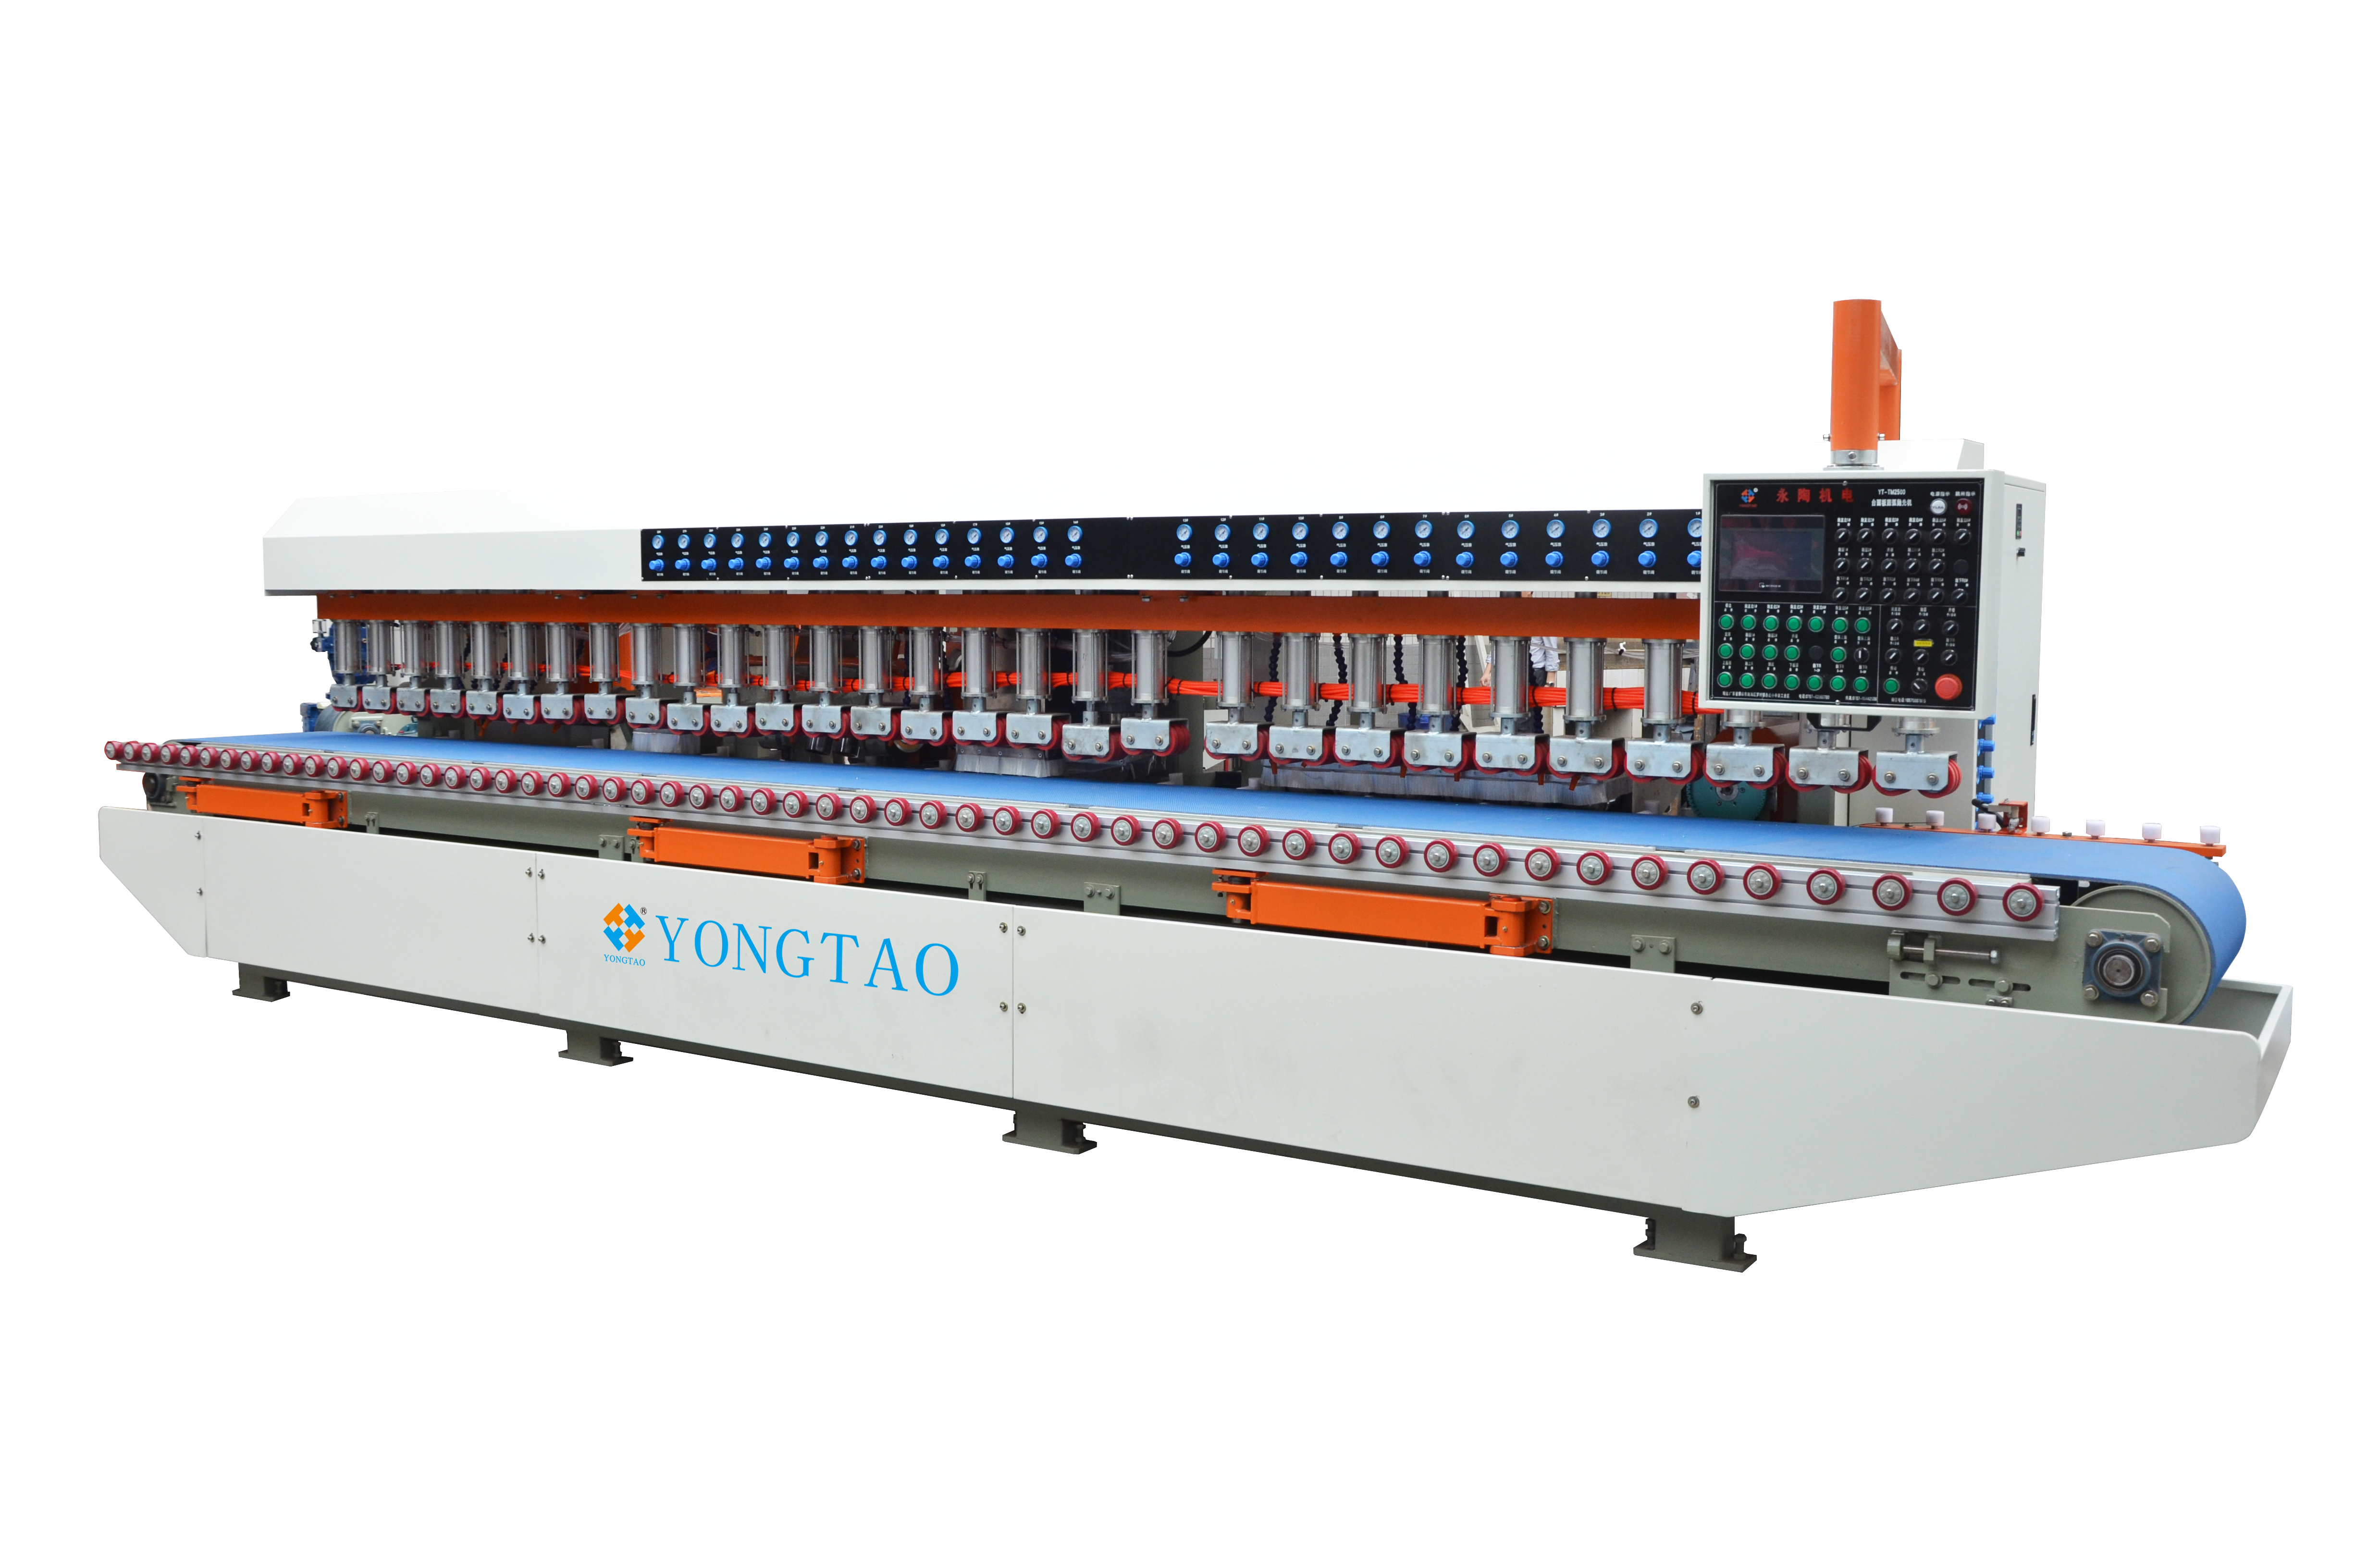 Ycyp 2500 Quartz Countertop Edge Polishing Machine China Yongtao